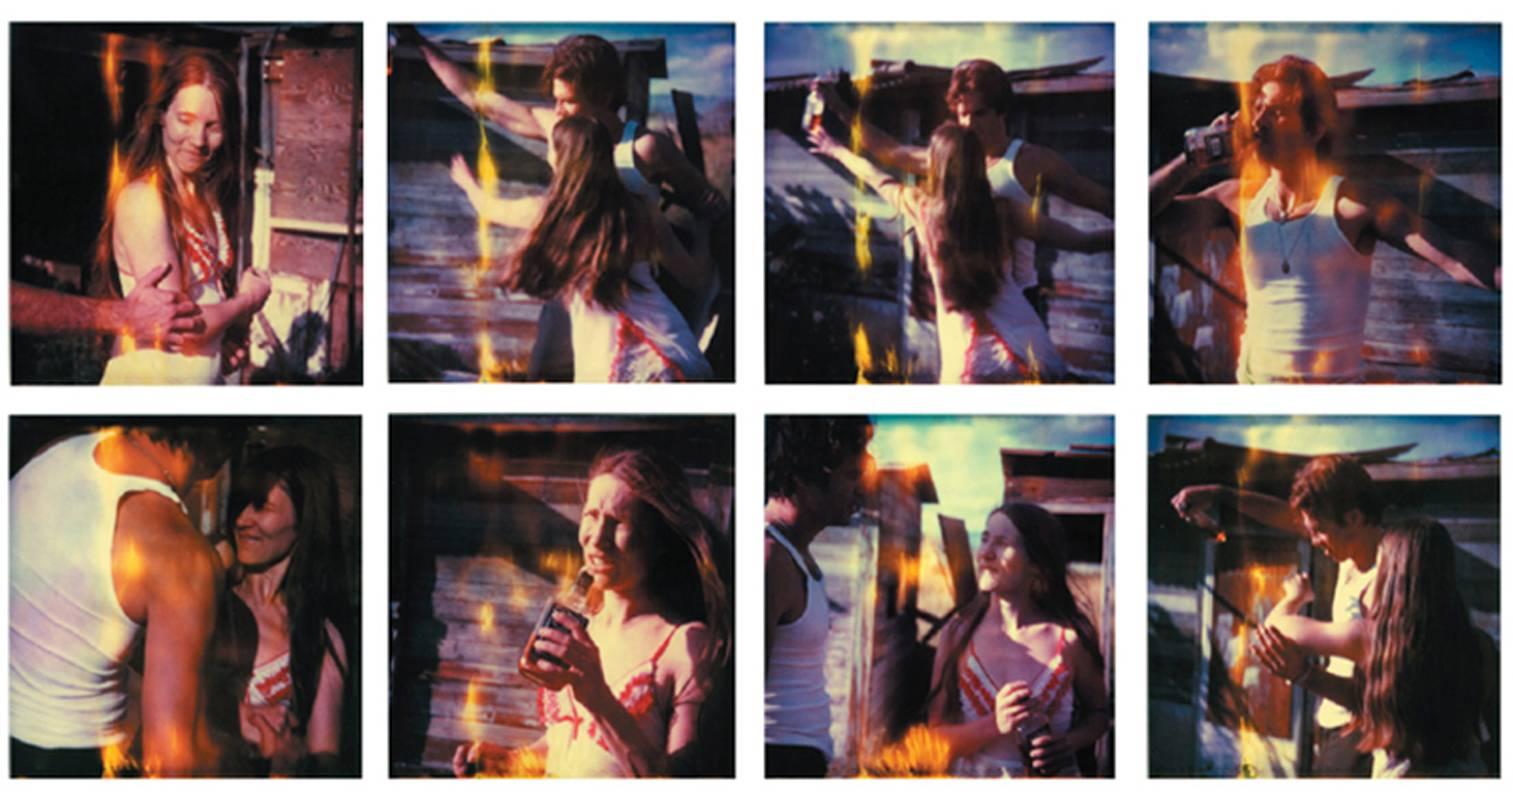 Stefanie Schneider Color Photograph - Whisky Dance I (Sidewinder) 8 pieces, analog, 82x80cm each